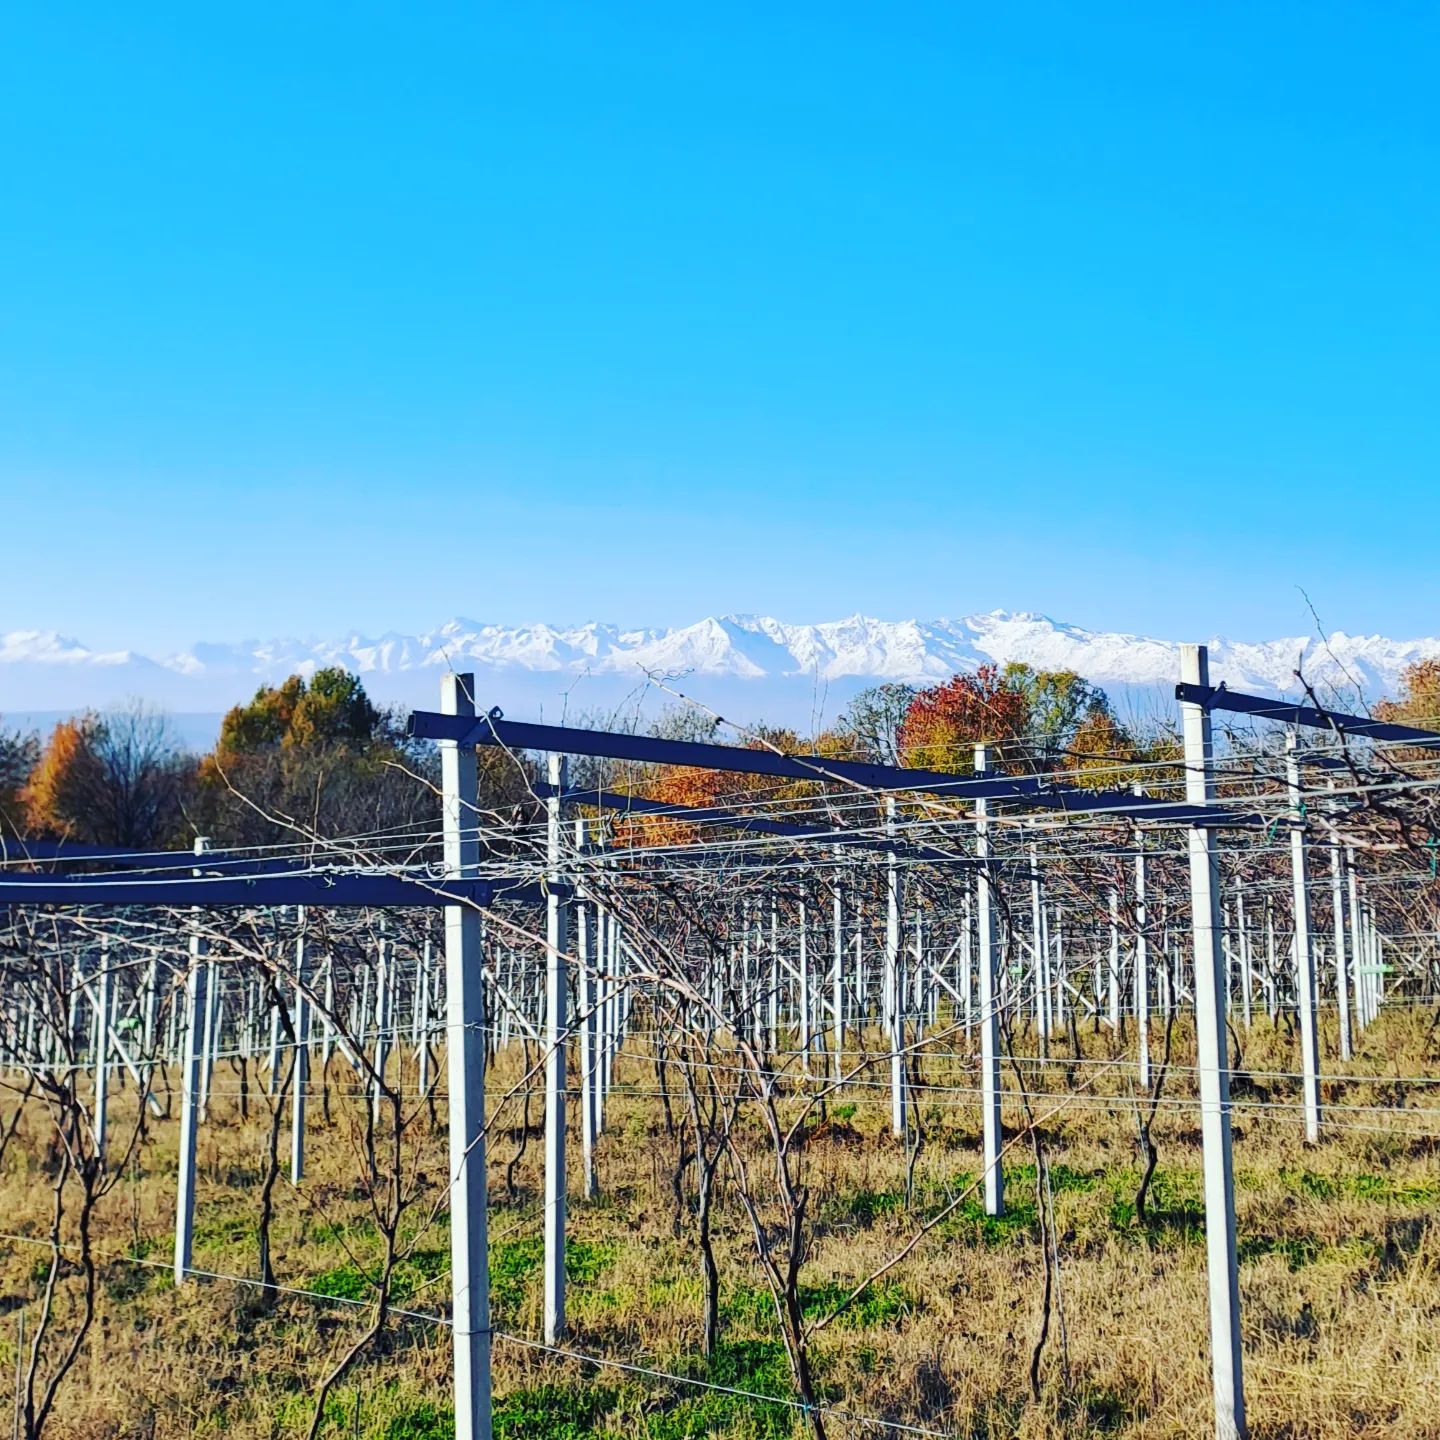 #winteriscoming #winter #inverno 

#montagna #mountains #valledaosta #erbalucedicaluso #erbaluce #wineblogger #winelover #moncrivello #canavese #piedmont #piemonte #italy🇮🇹 #italia #piemont #vercelli #ピエモンテ #イタリア #italien #italie #italië #moncravel